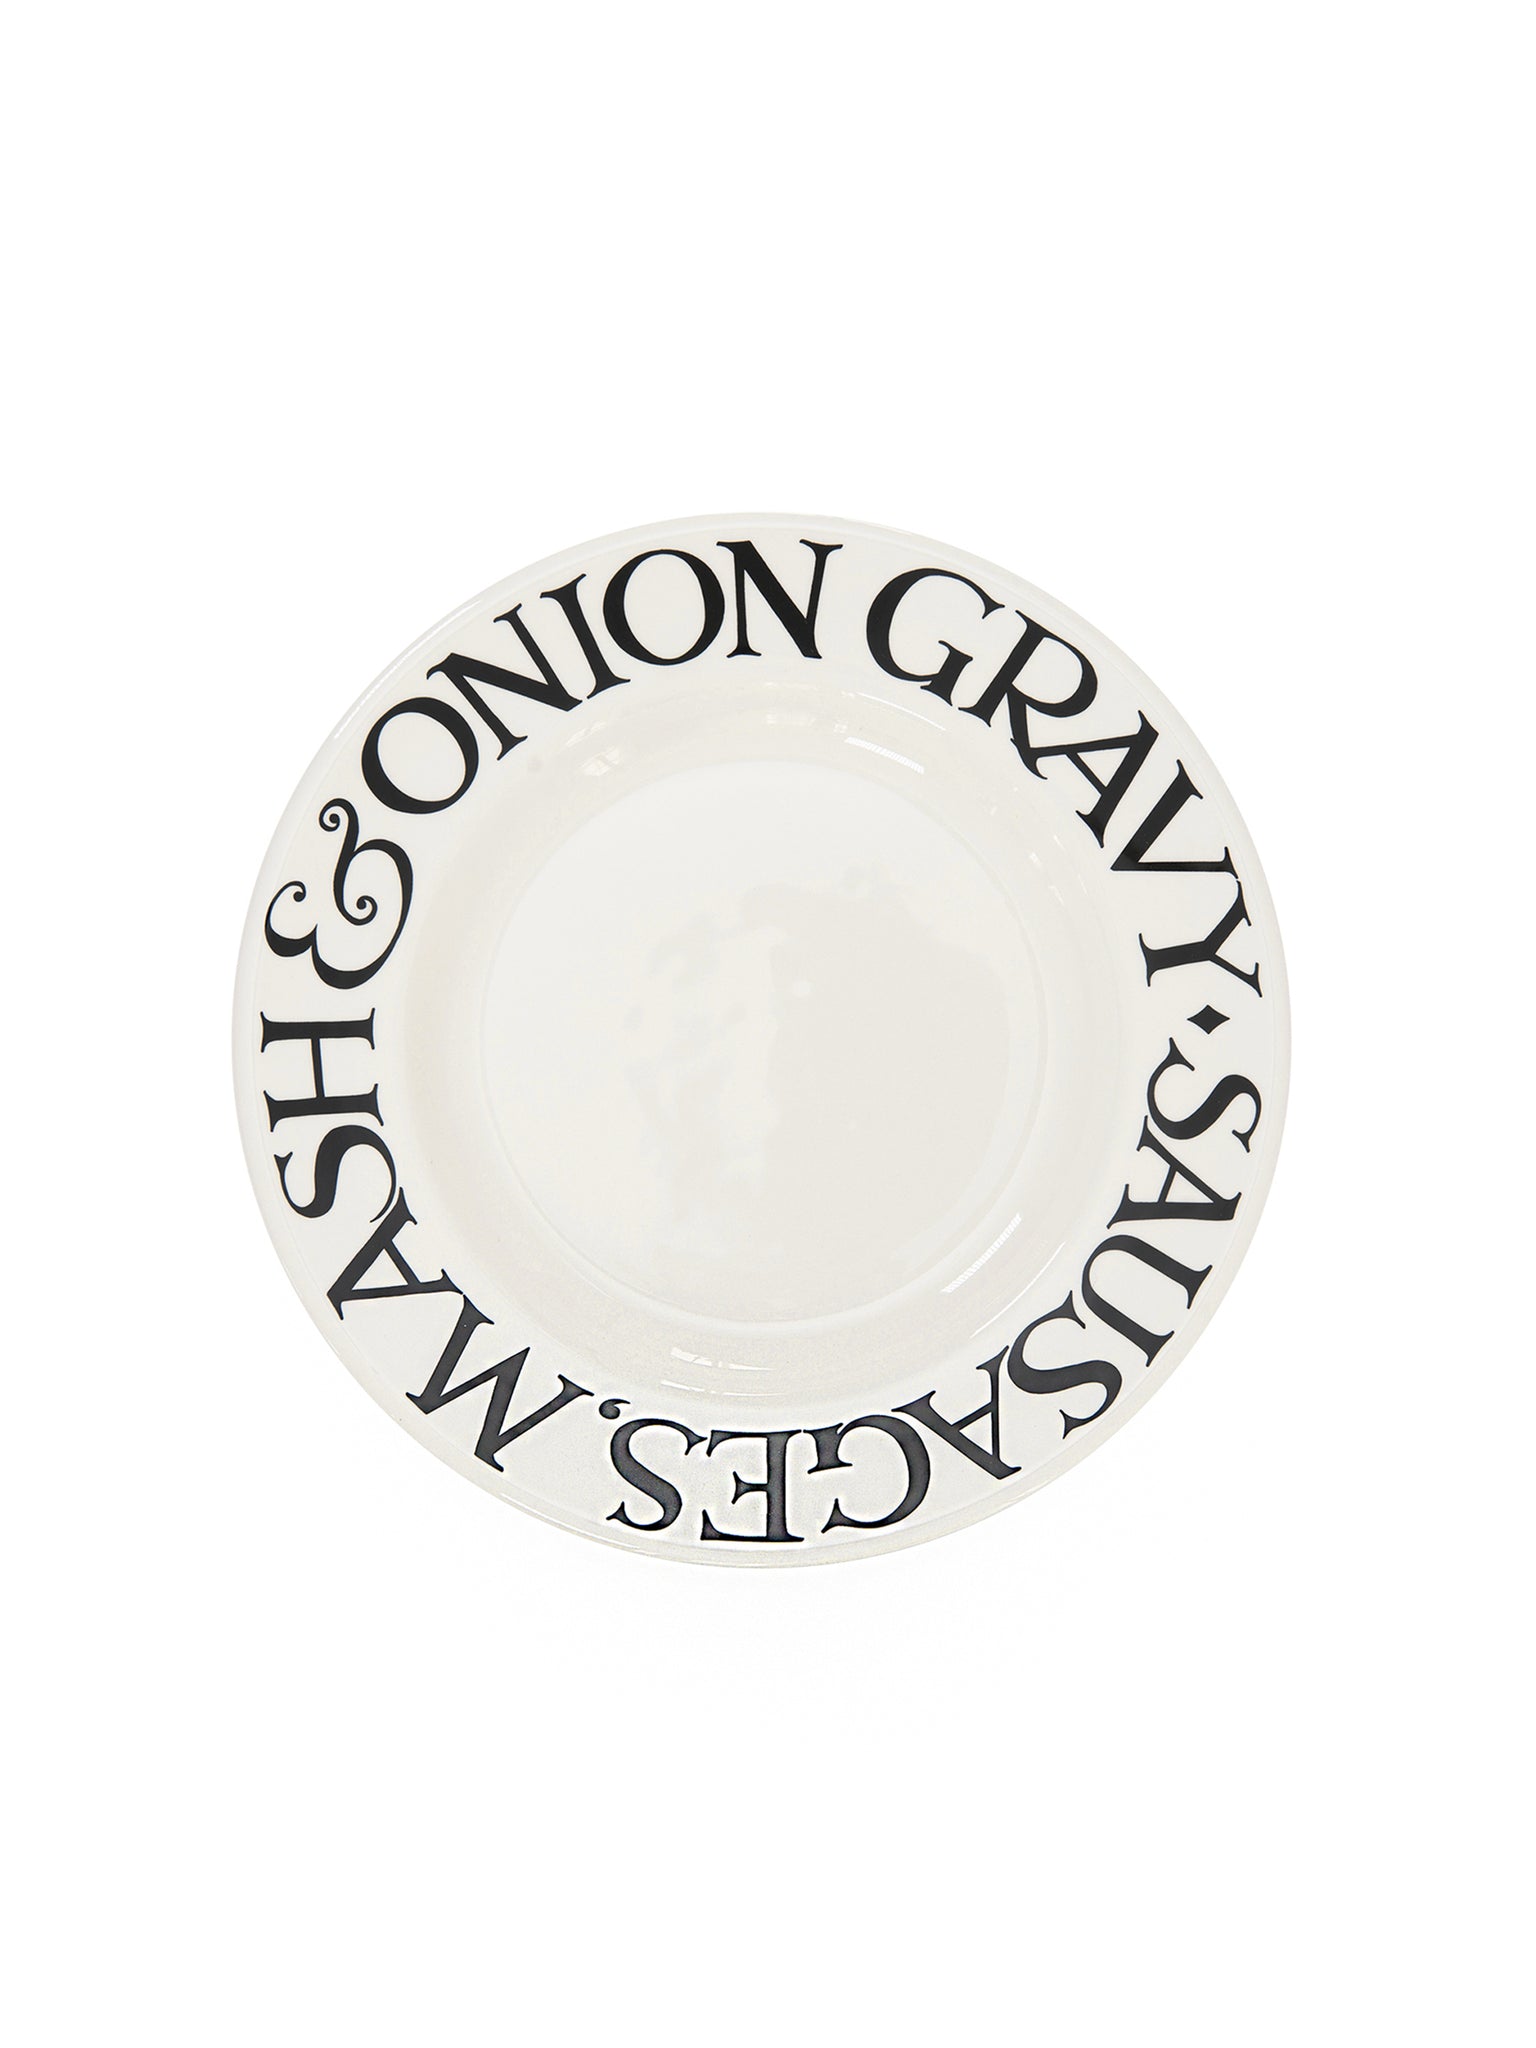 Emma Bridgewater Black Toast Sausages & Onion Gravy 10.5 Inch Plate Weston Table